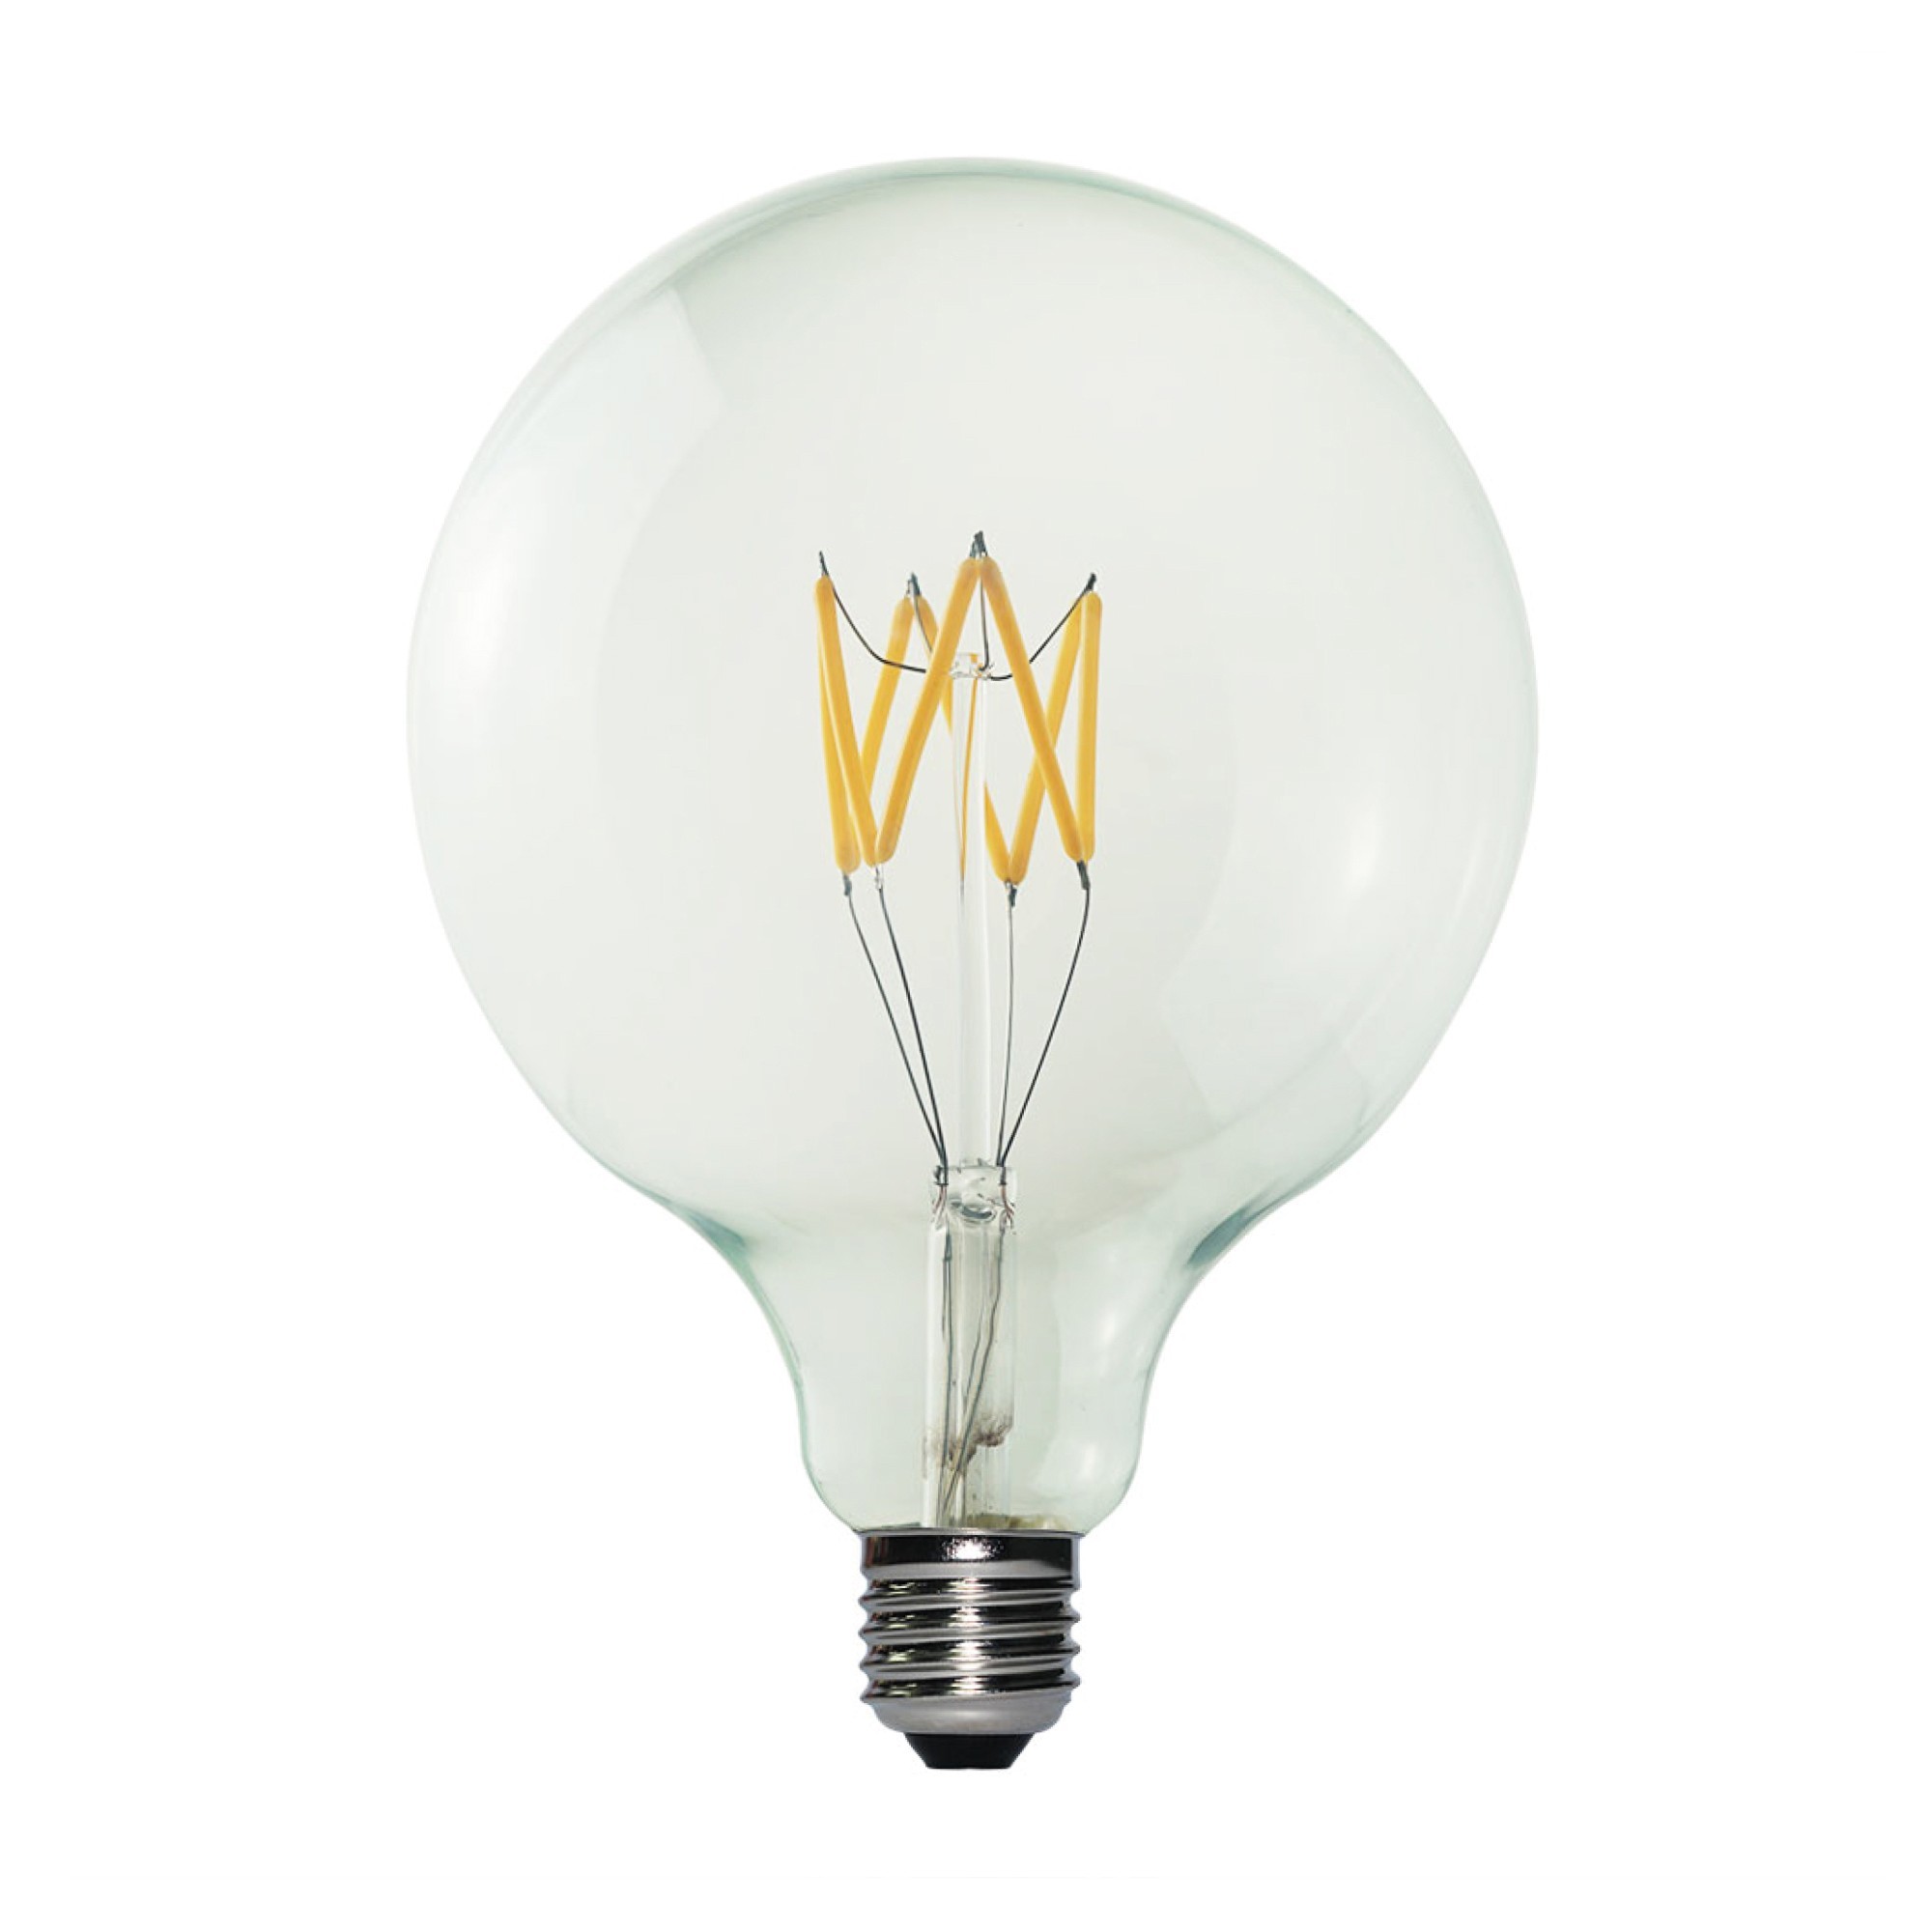 B04 - LED Light Bulb 5V G125, E27, 1,3W, 2500K, 110Lm, clear glass